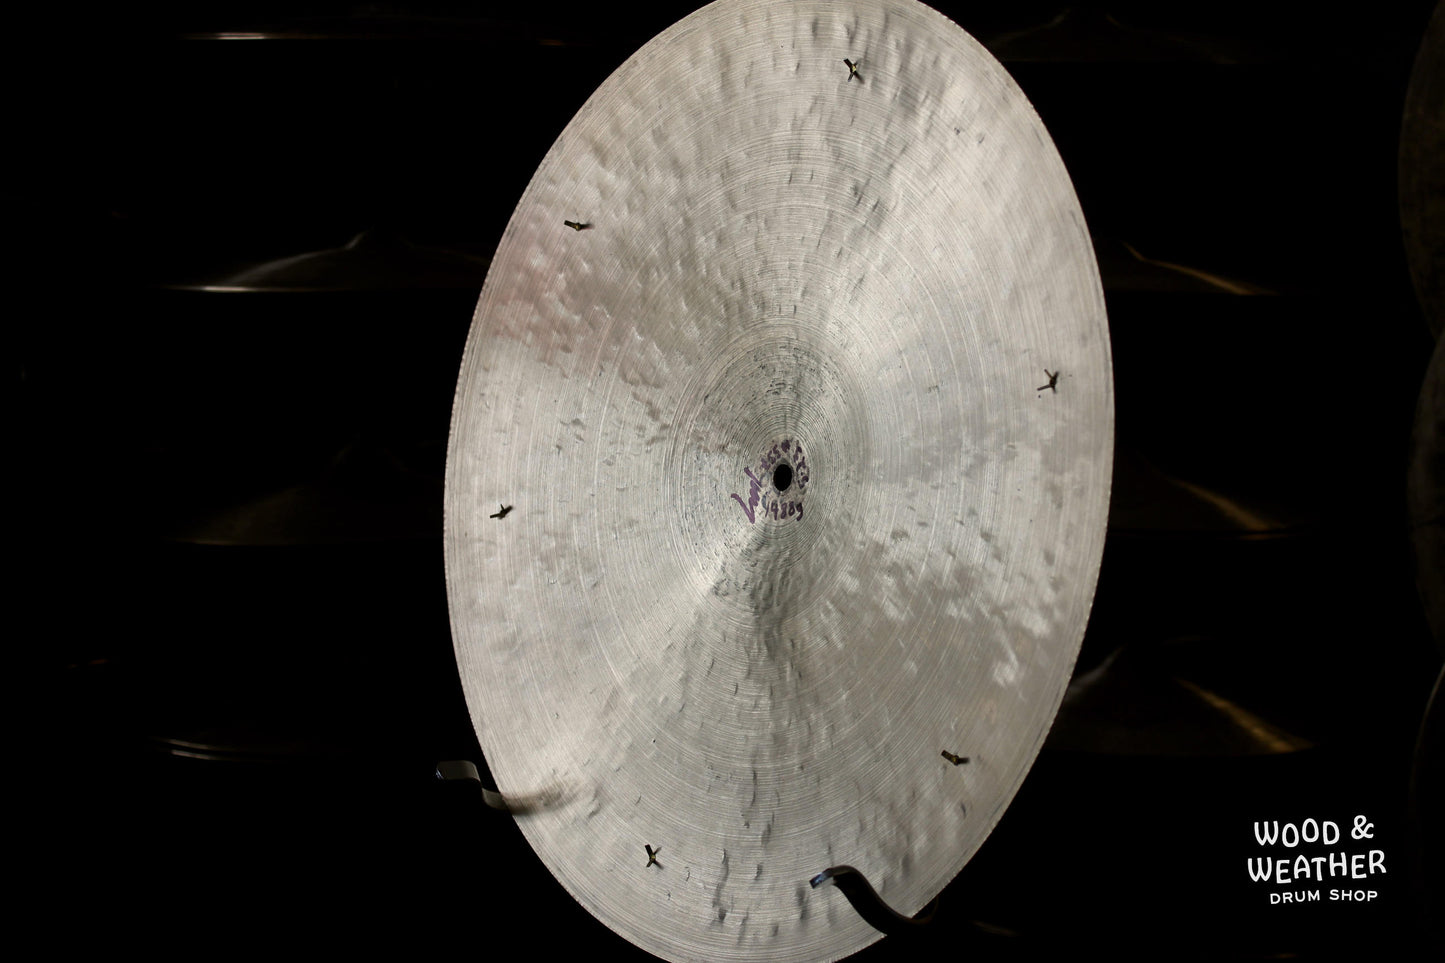 Mongiello Cymbals 18" Prestige Series Type III Eric Binder Signature Ride Cymbal w/ Rivets 1488g